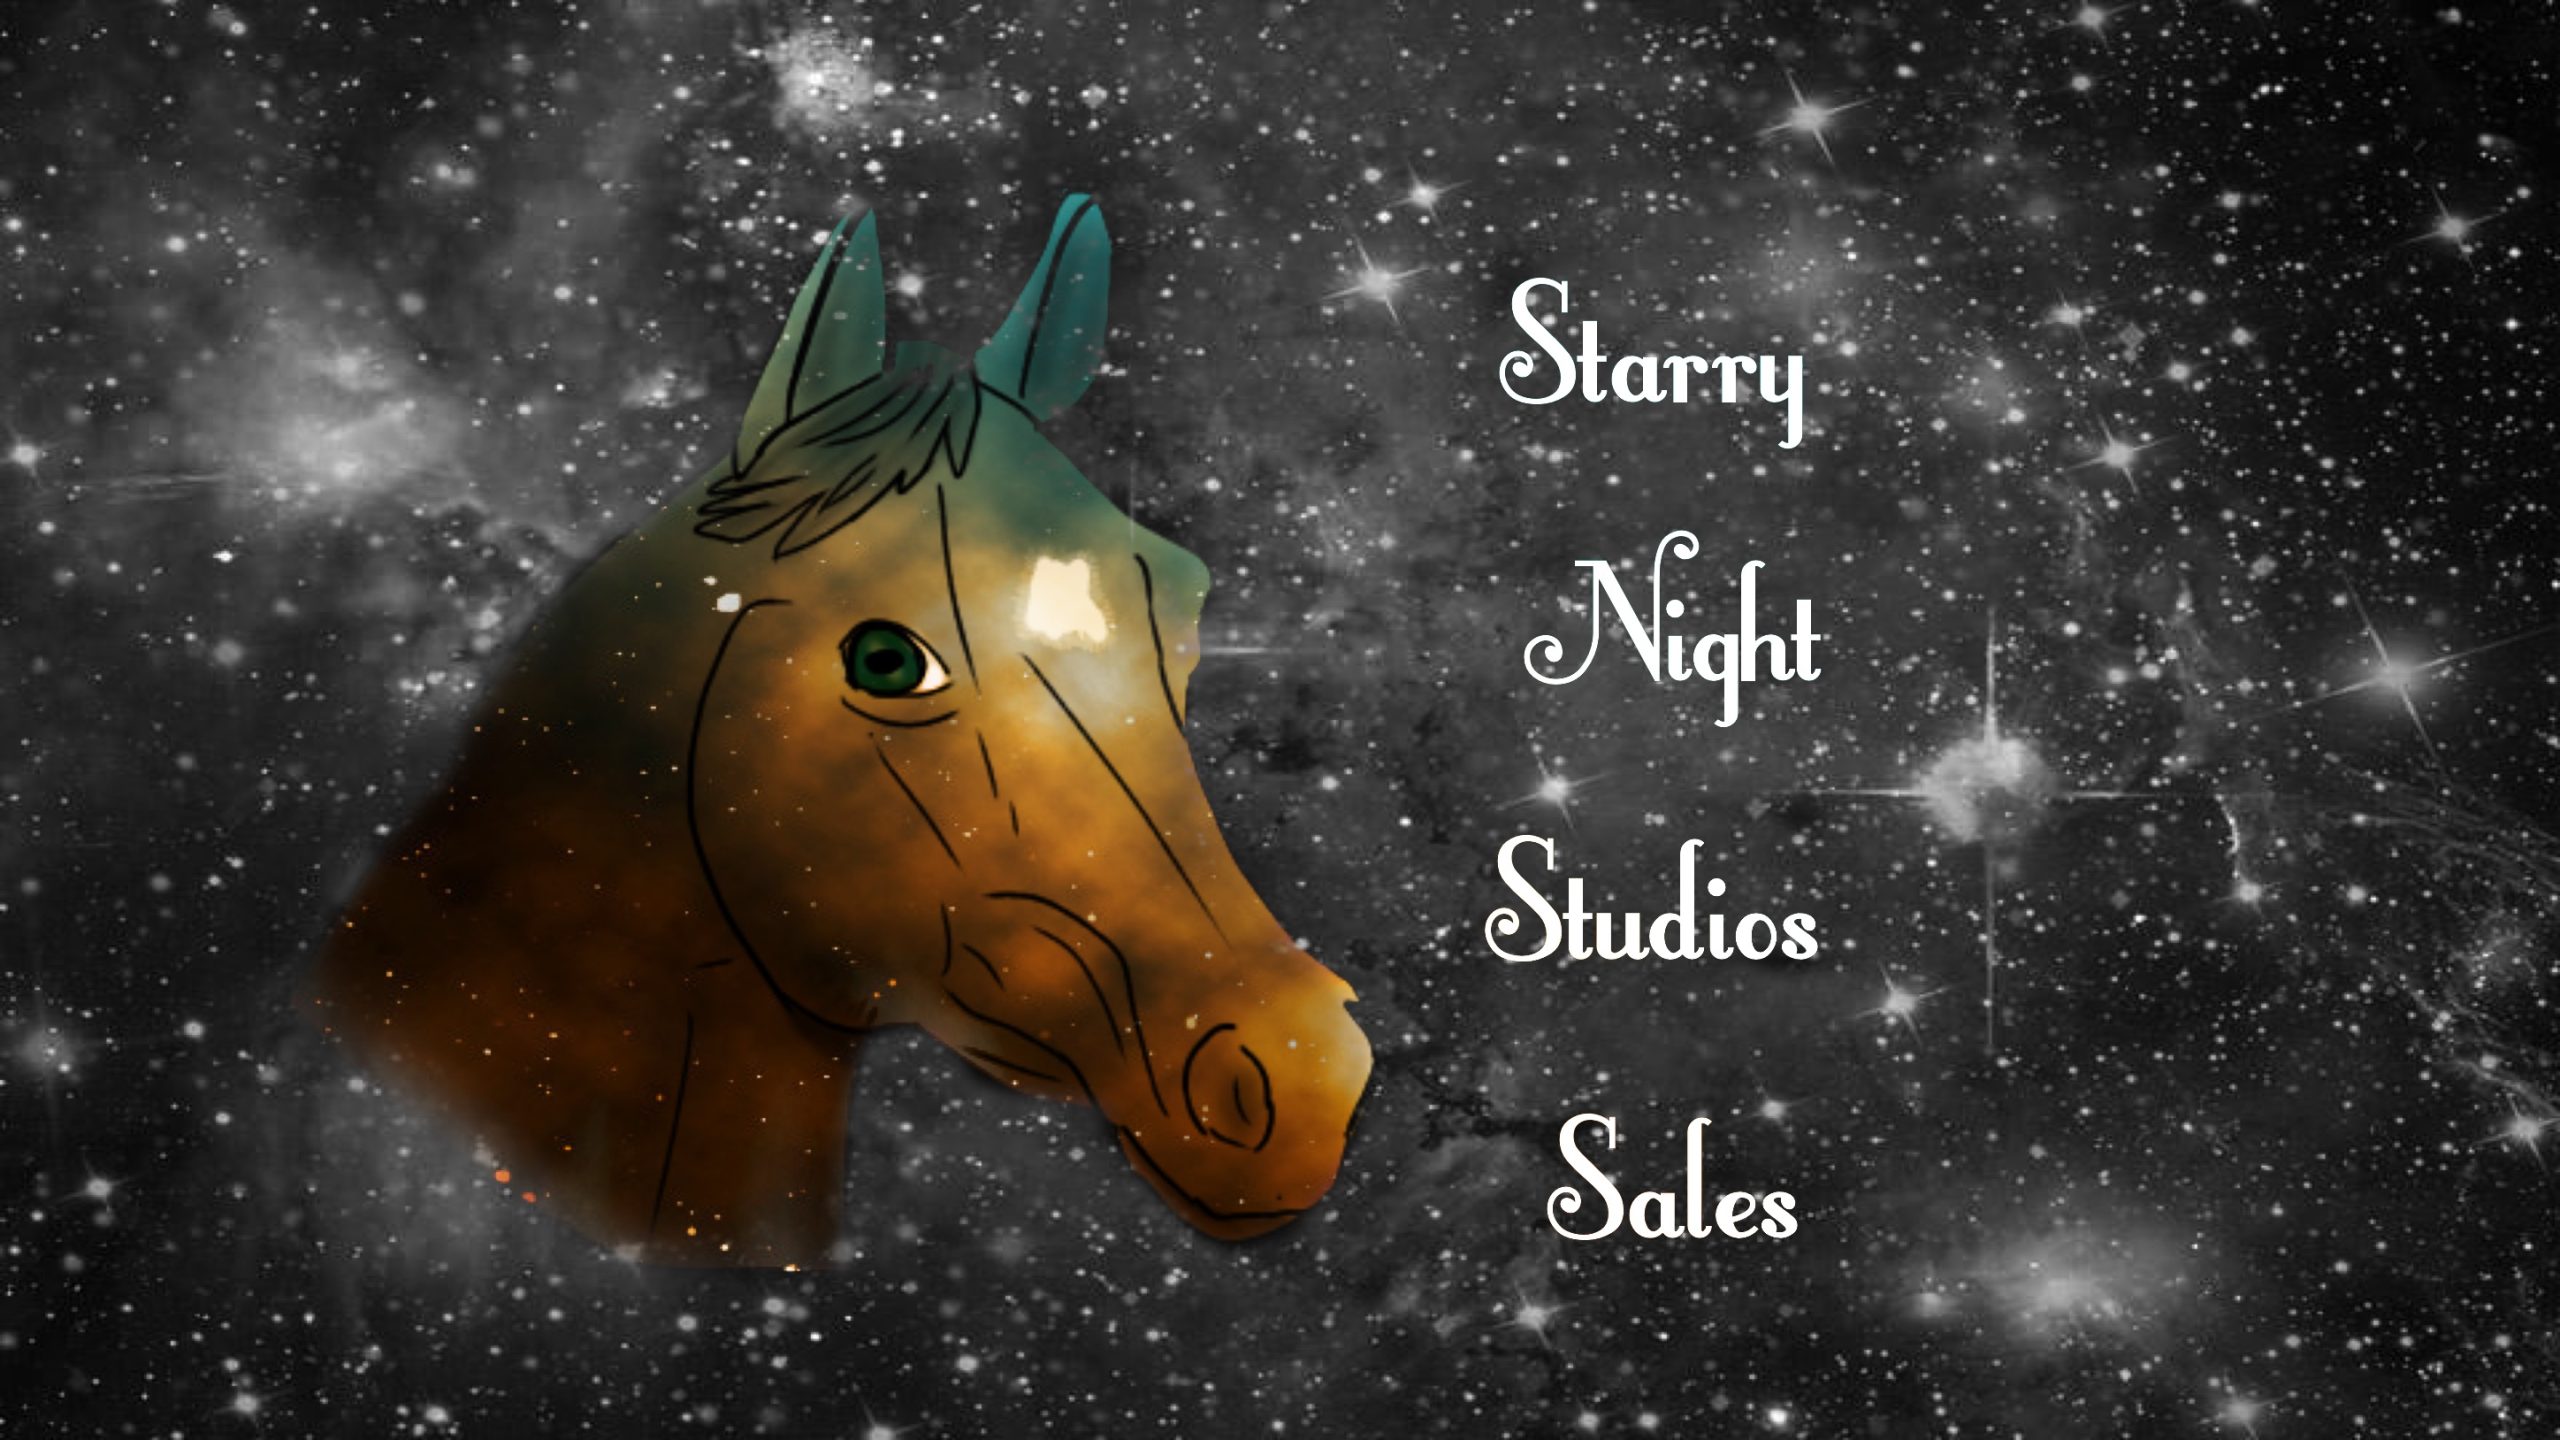 Starry Night Studios Sales